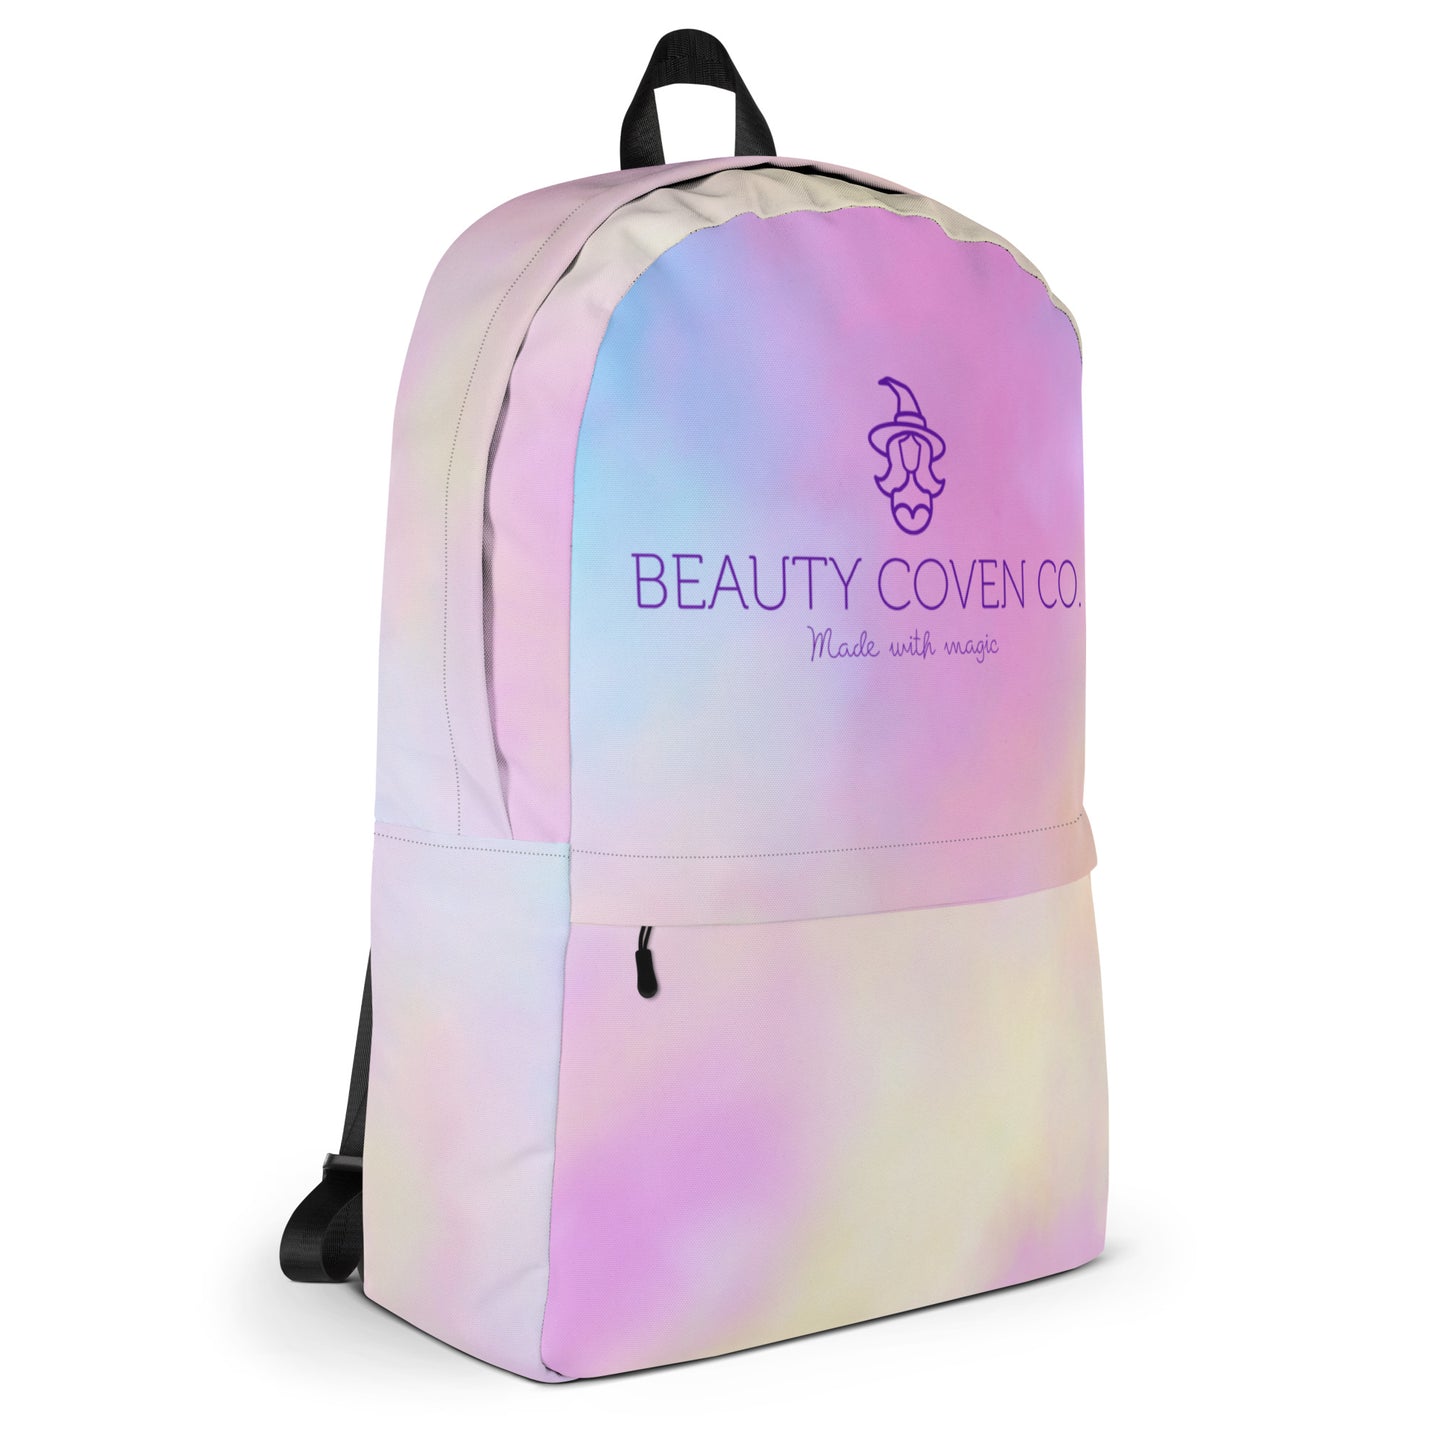 Beauty Coven Co. Backpack